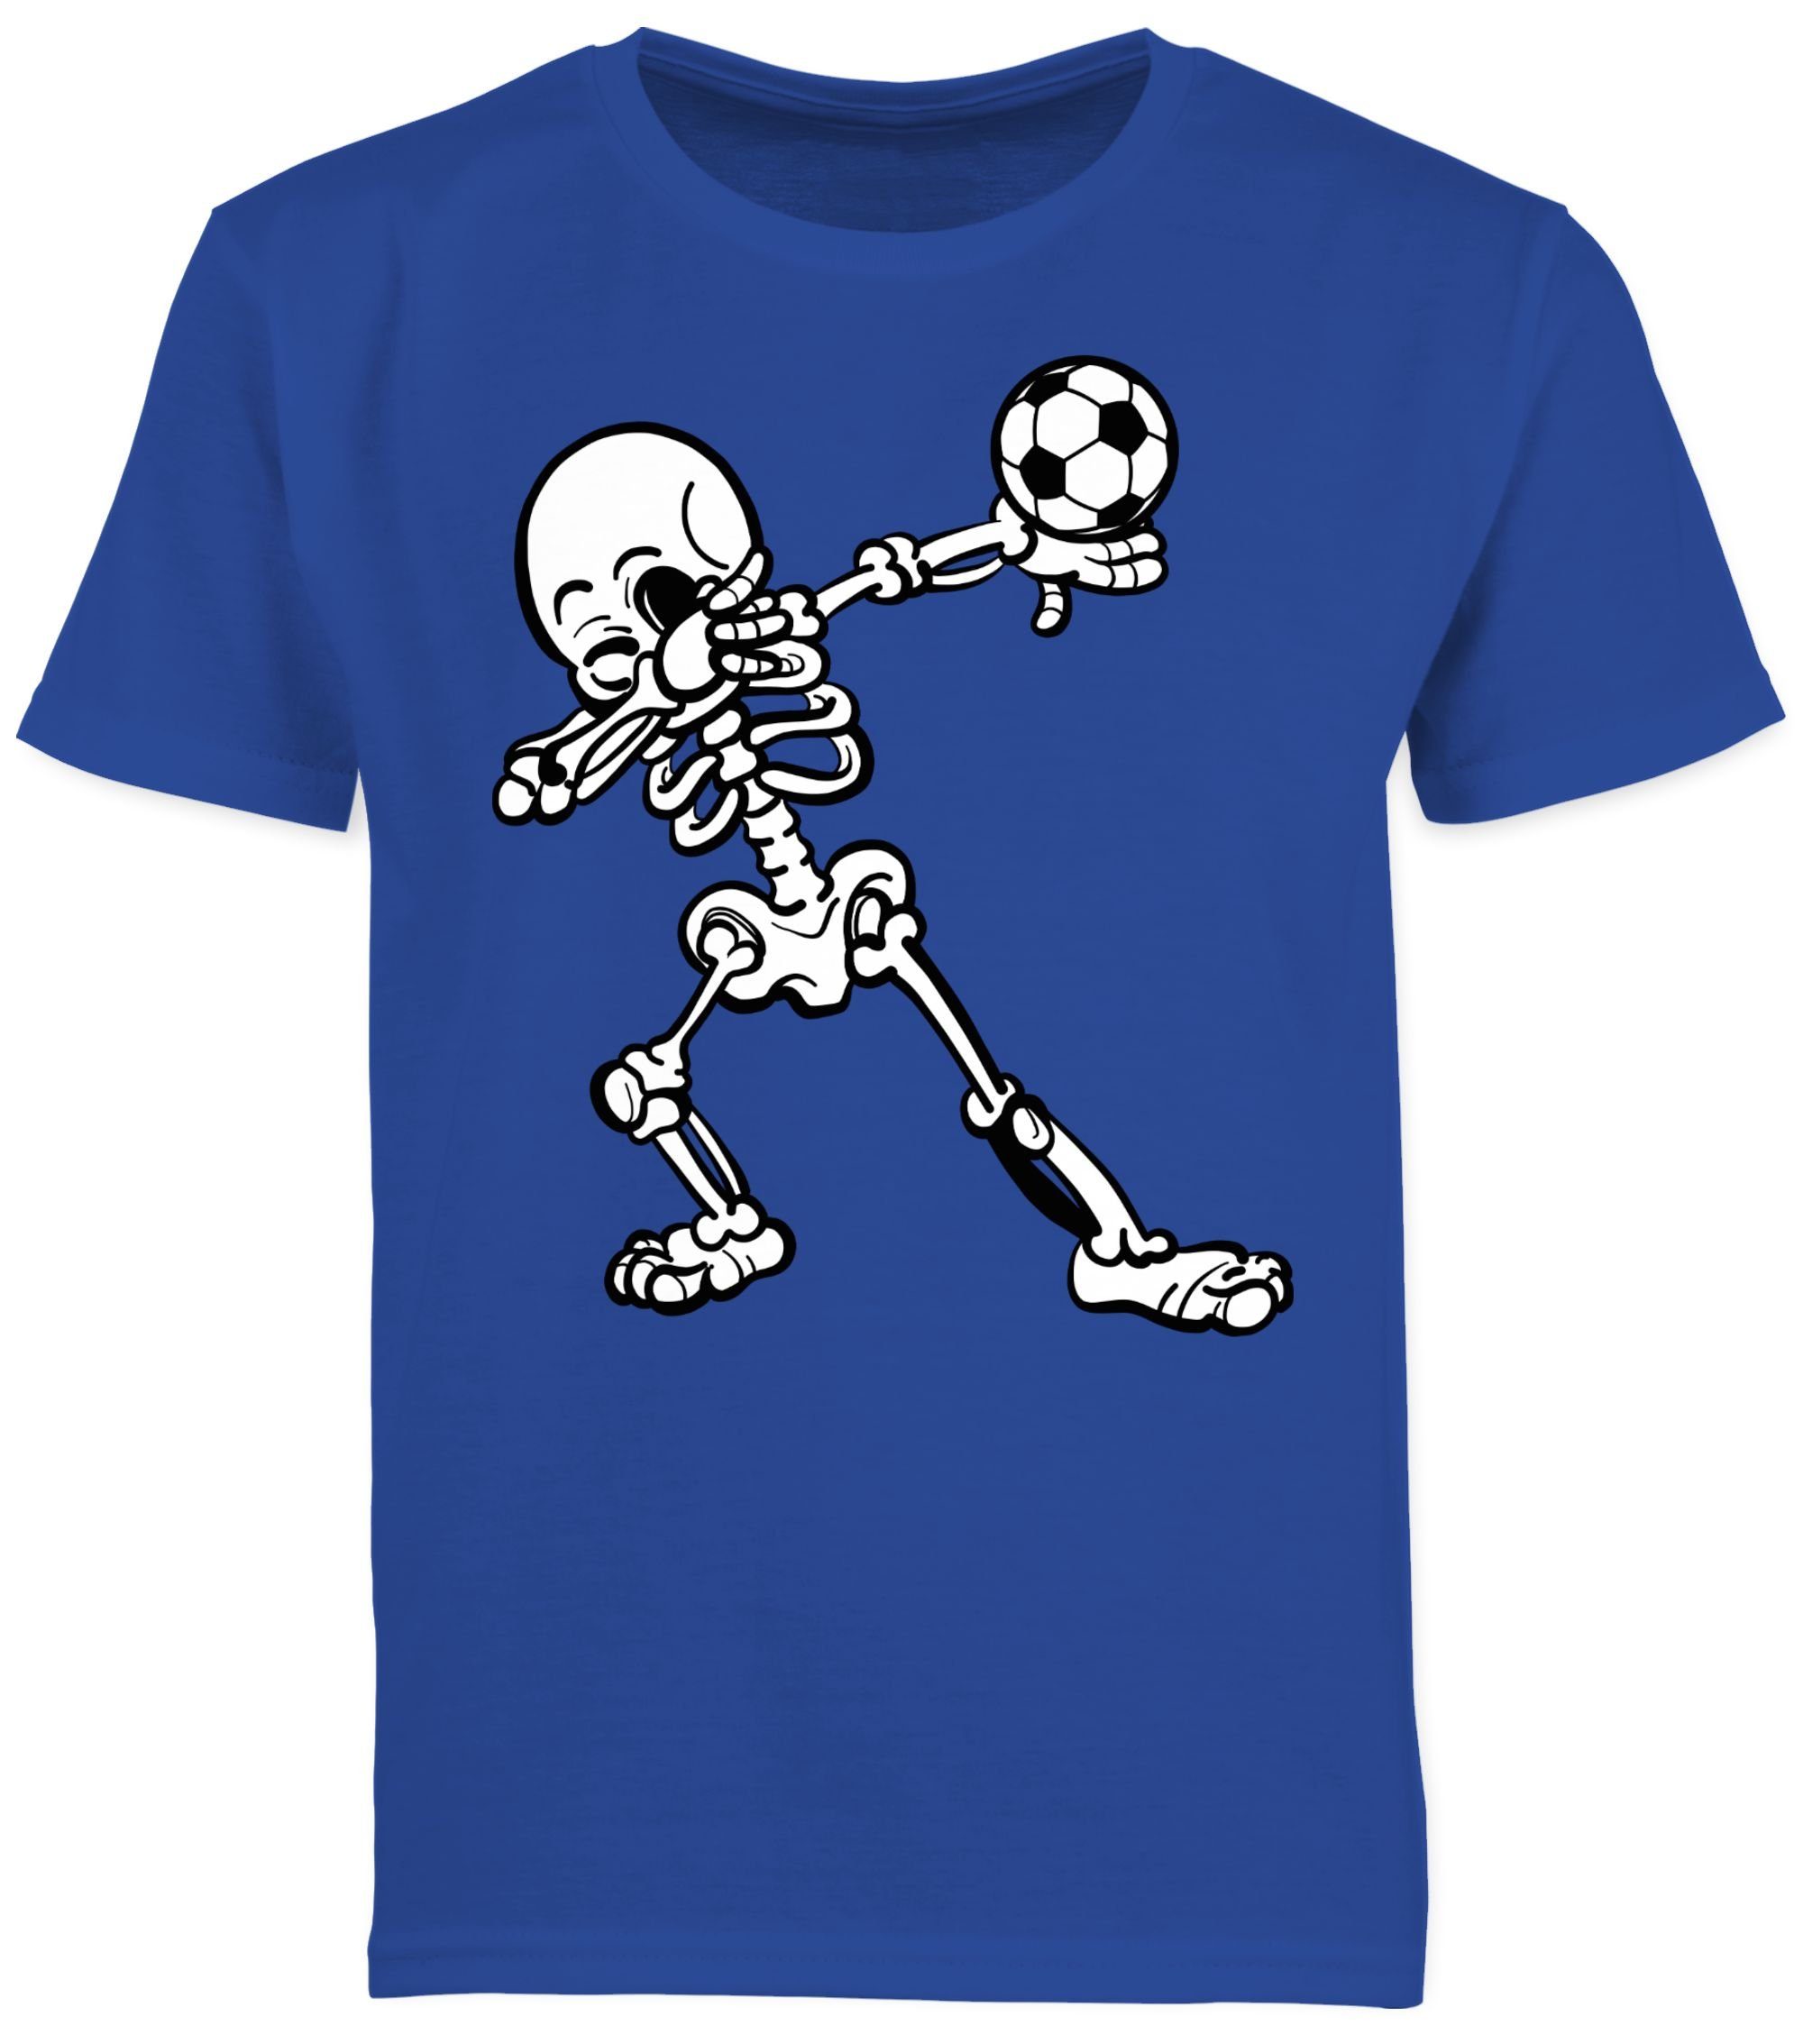 Kinder 3 Skelett Kleidung T-Shirt Sport Royalblau mit Shirtracer Dabbendes Fussball